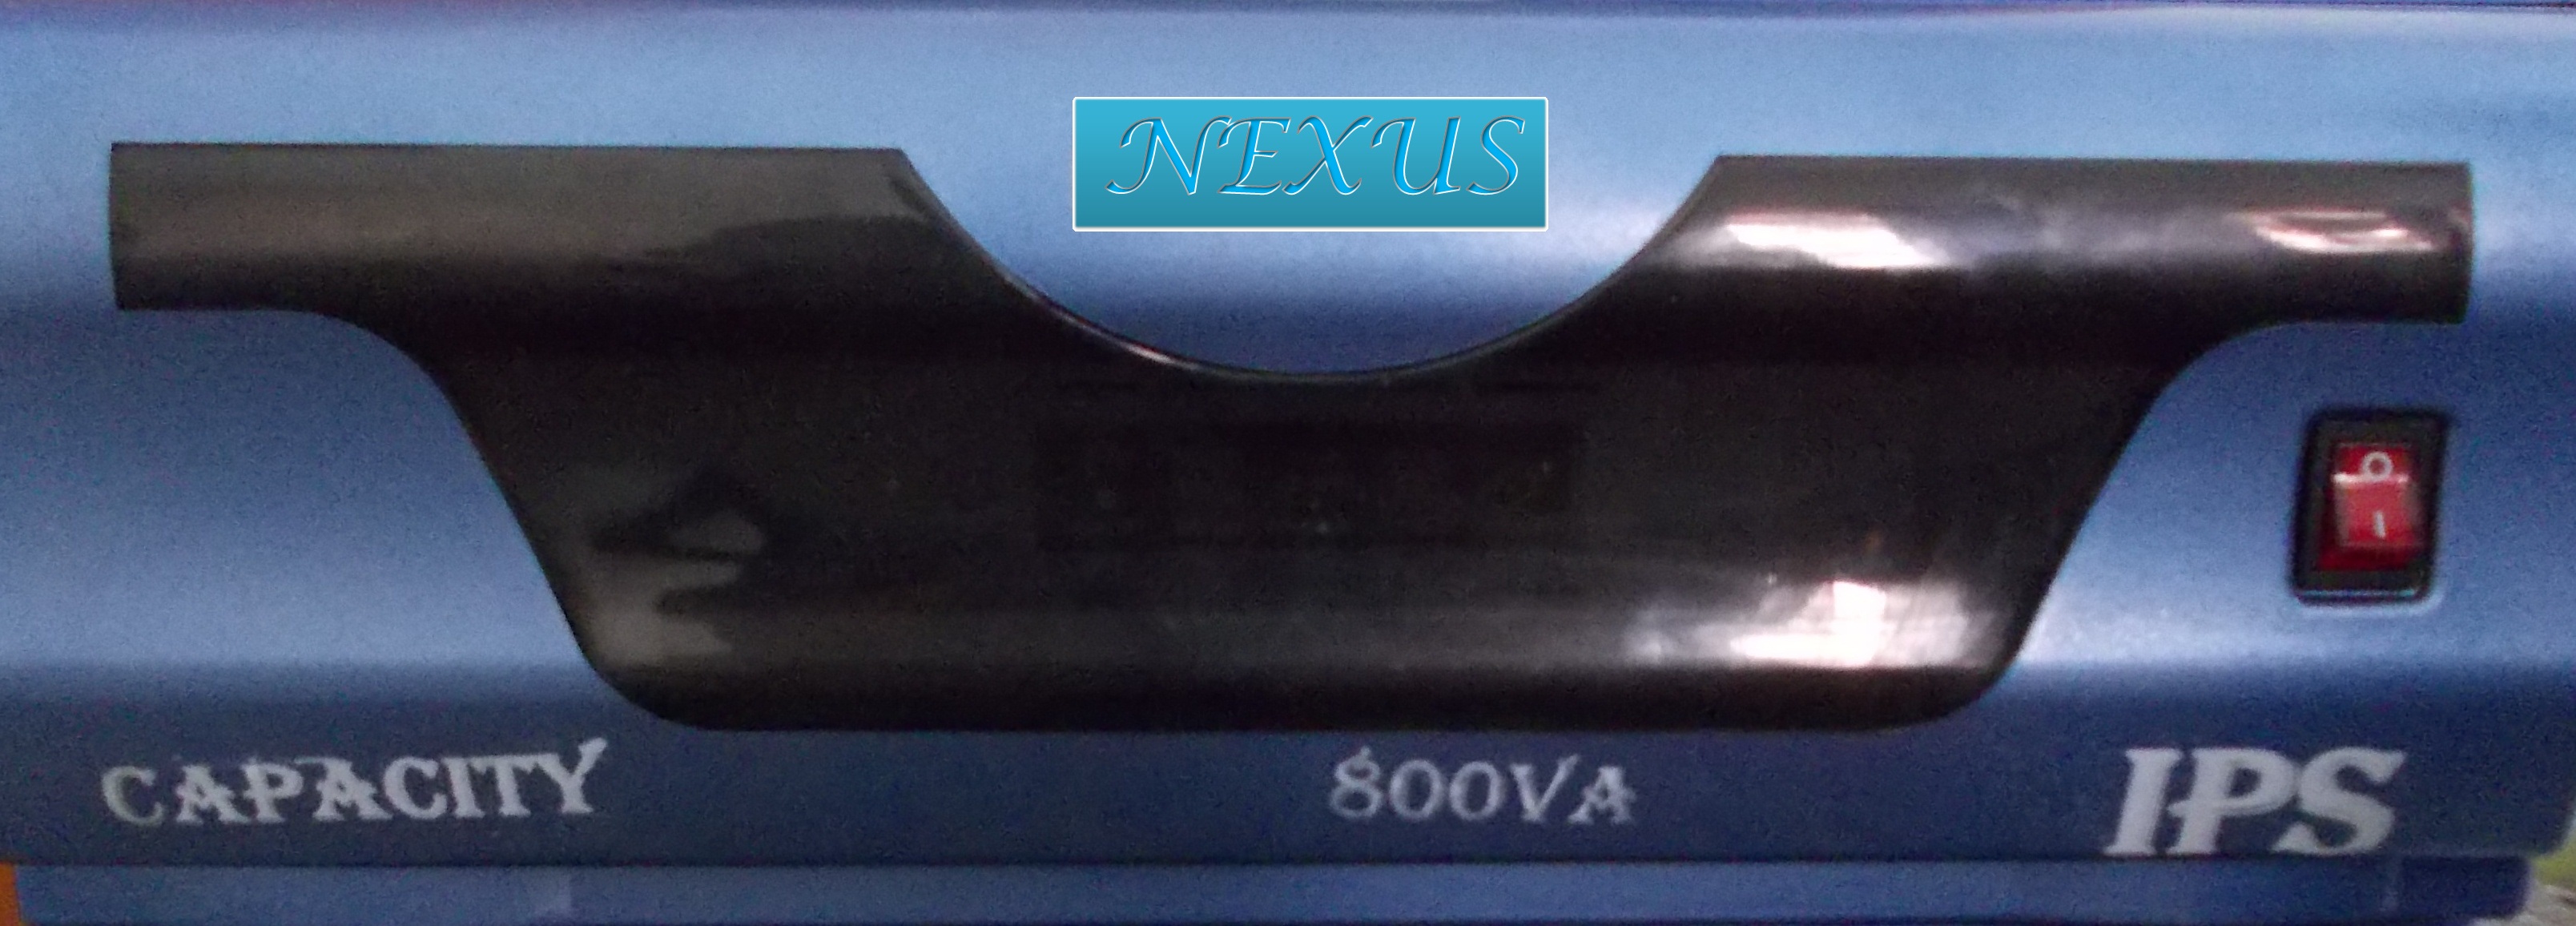 Nexus IPS 2 Years Warranty large image 0